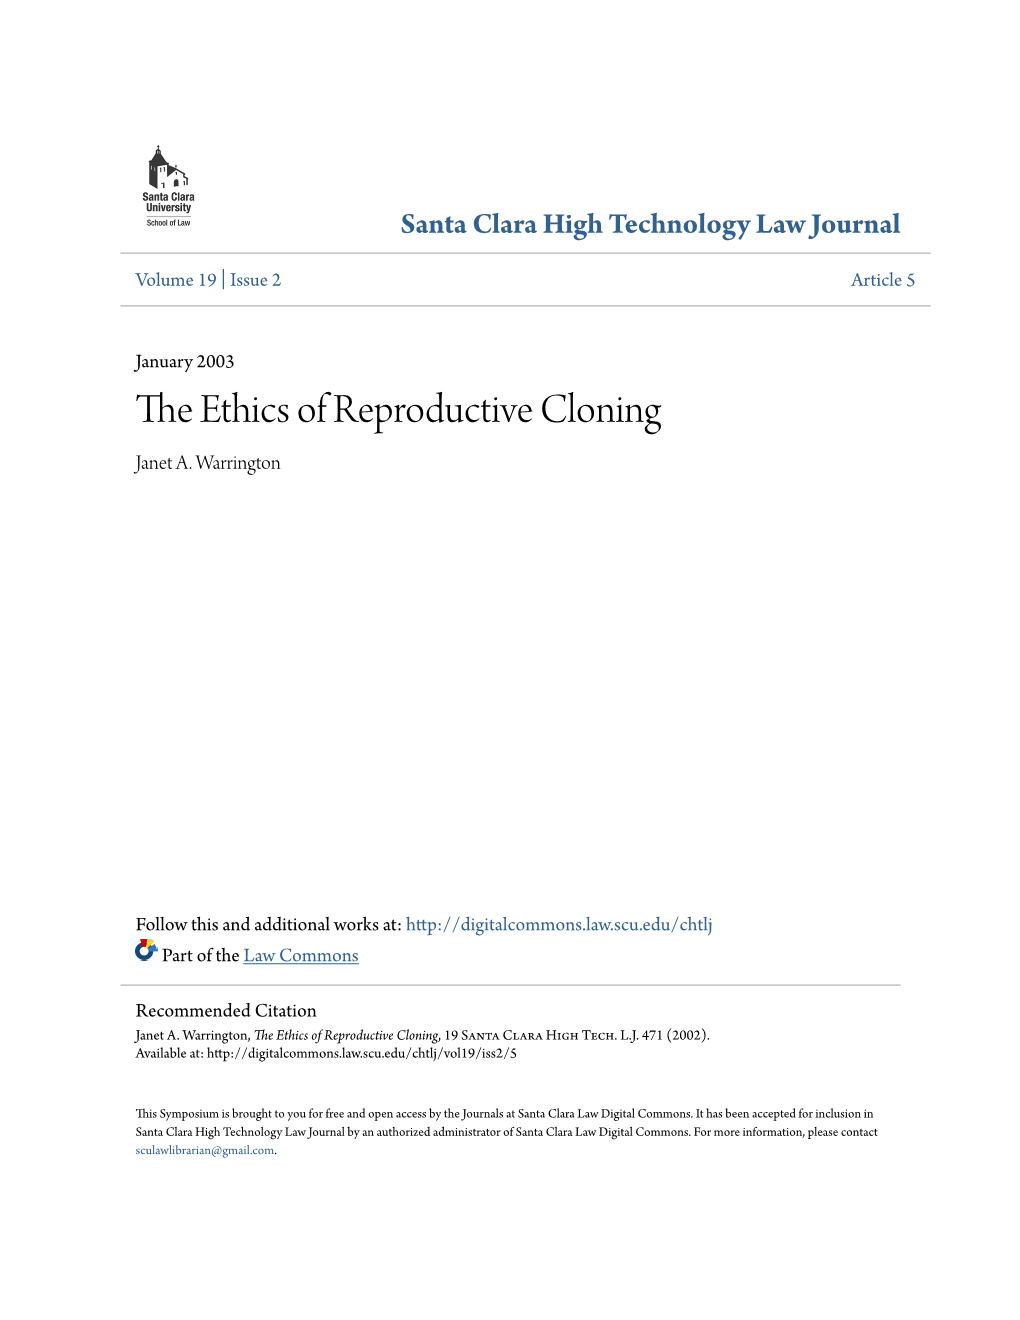 The Ethics of Reproductive Cloning, 19 Santa Clara High Tech